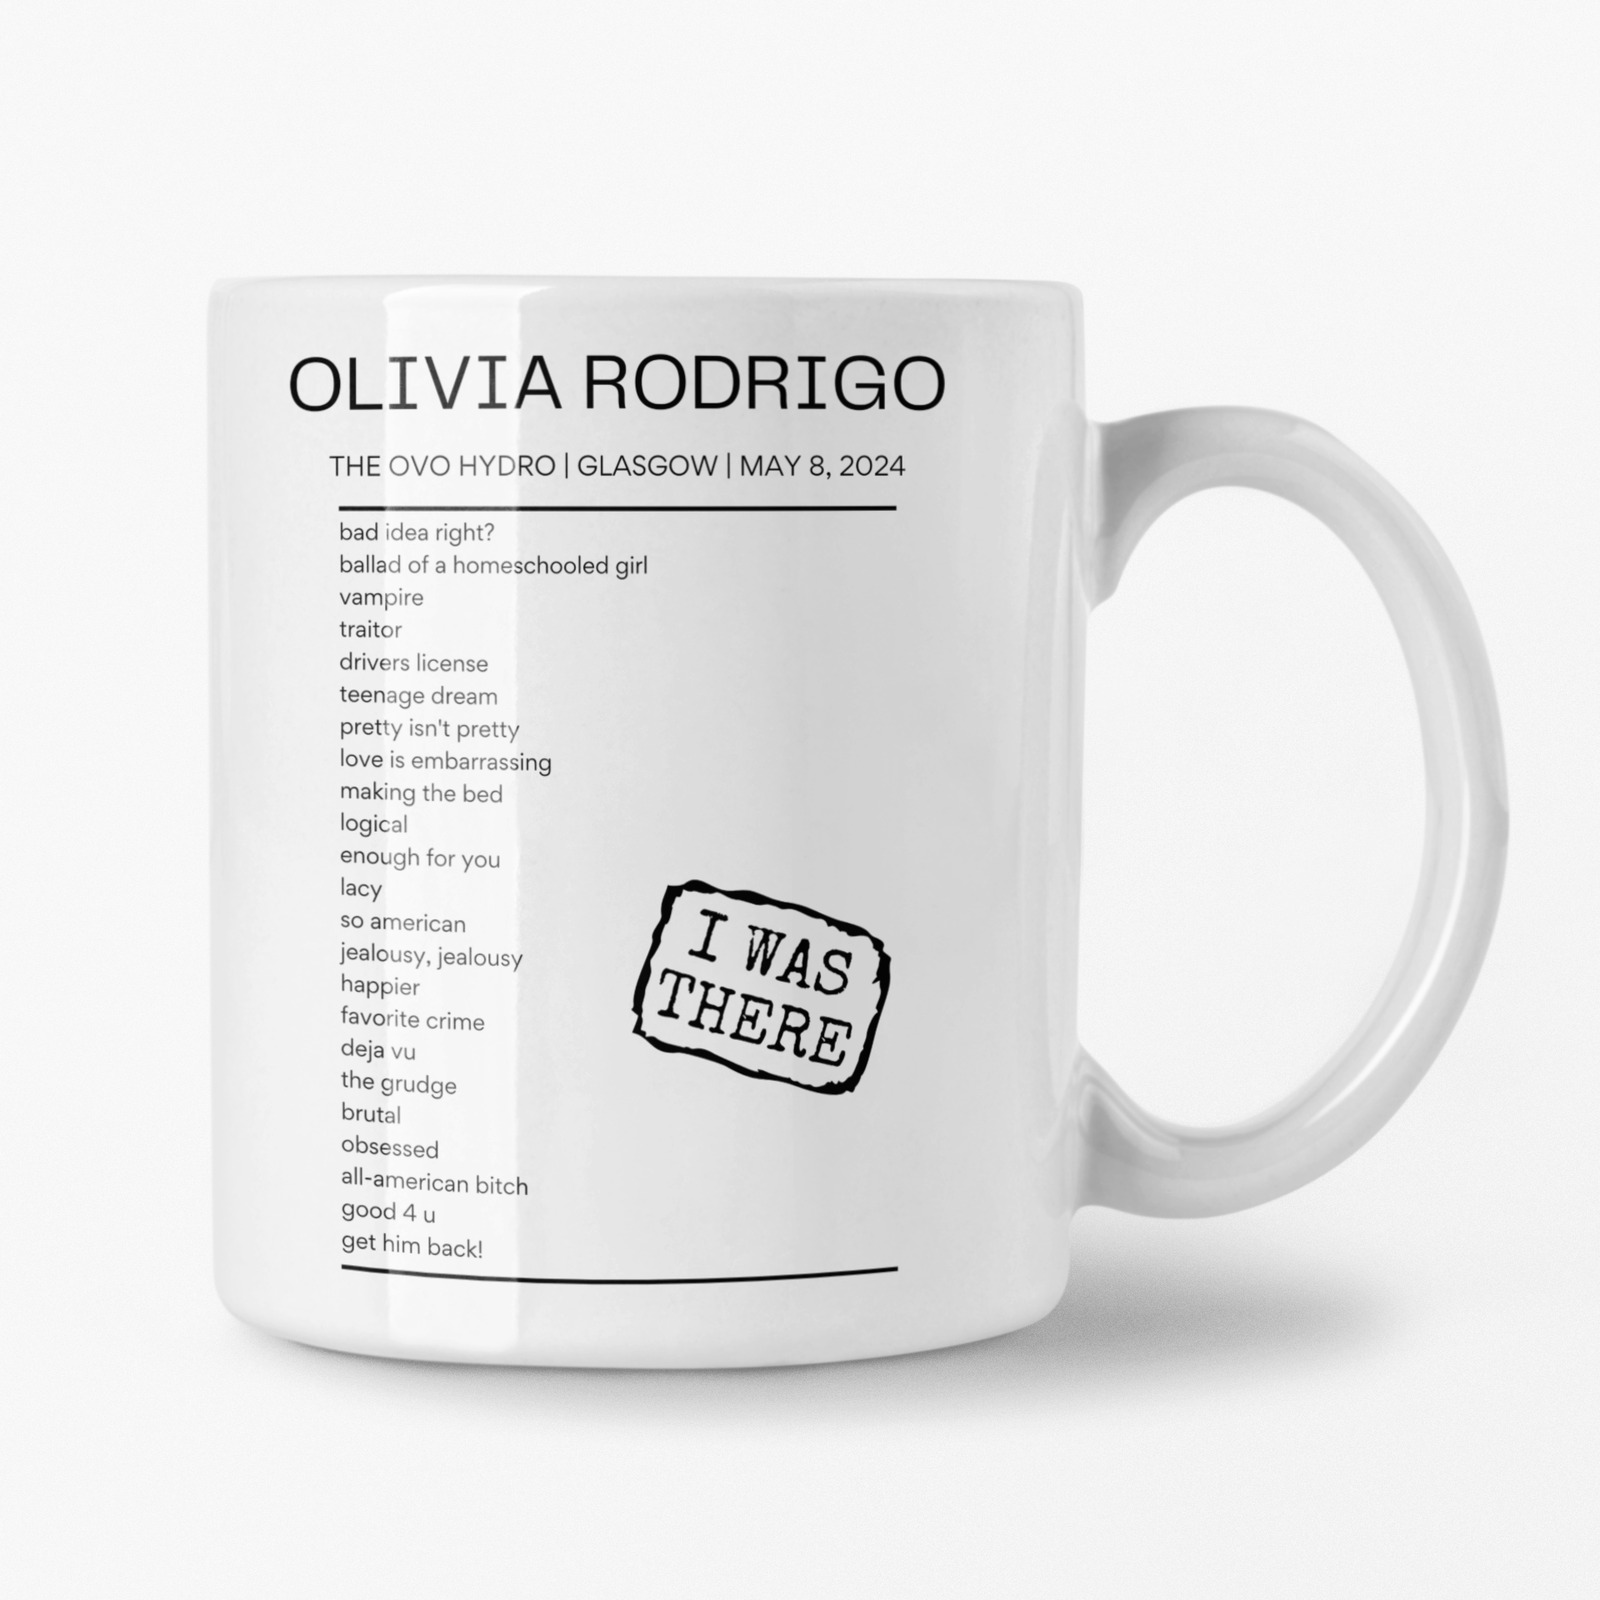 Olivia Rodrigo The OVO Hydro Glasgow May 8, 2024 Replica Setlist Mug